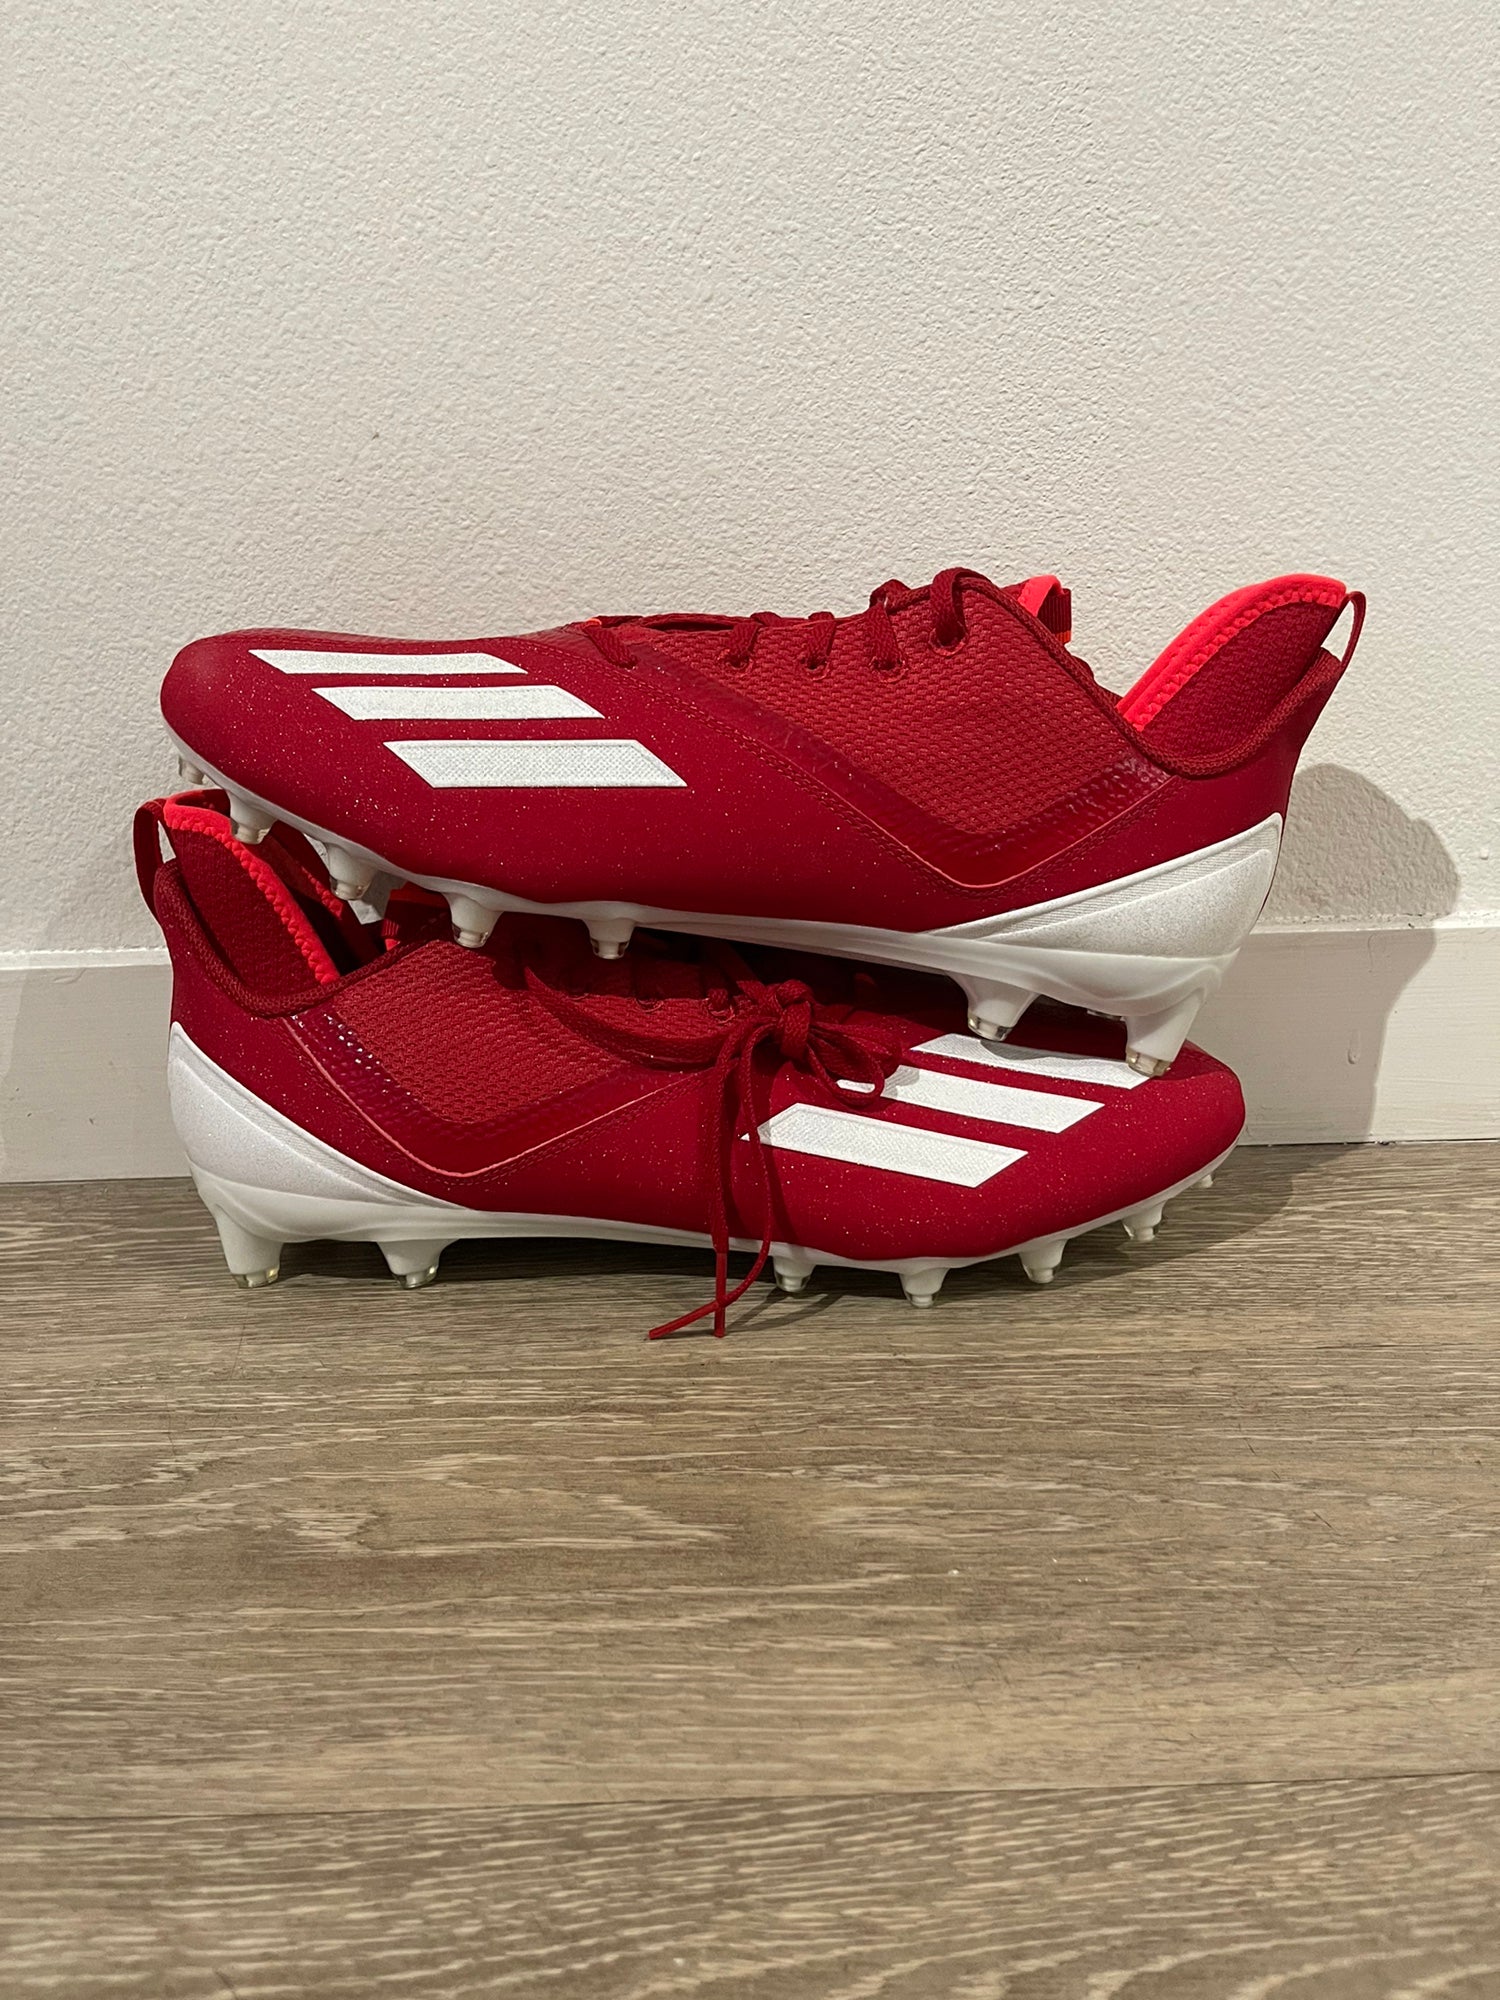 Adidas Adizero Scorch Football Cleats Red/White Mens Size 15 FX2088 ...